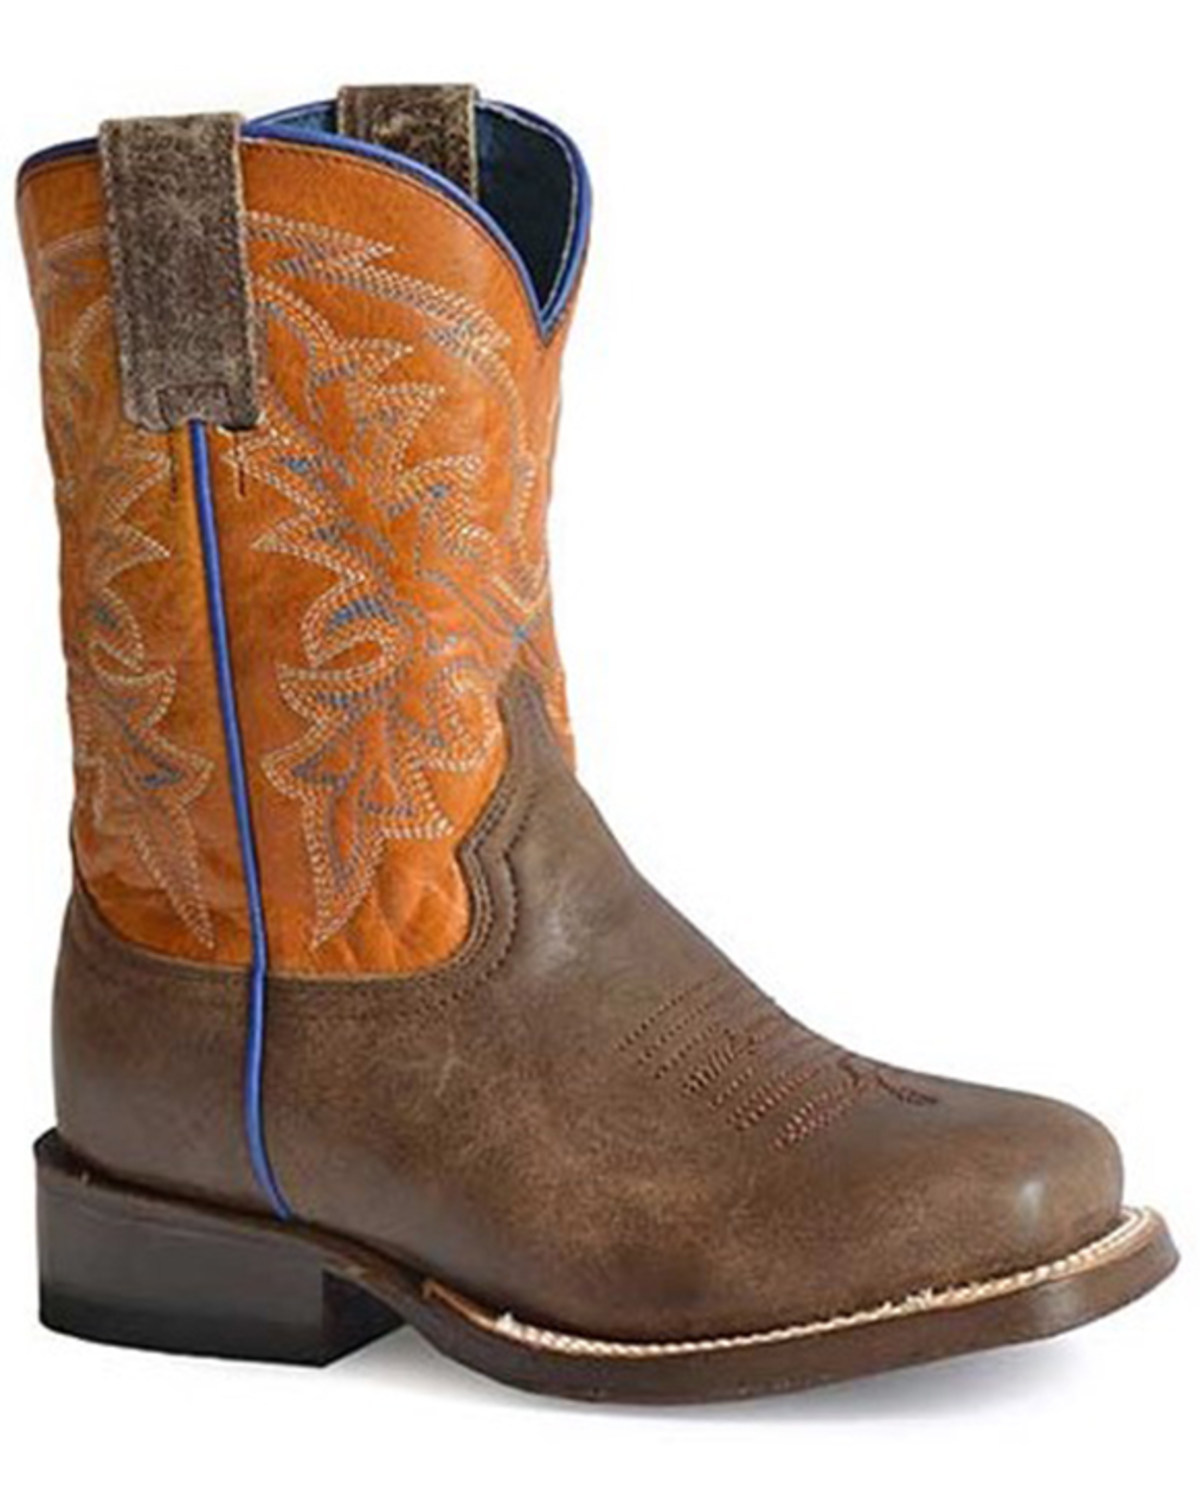 Roper Boys' Colt Western Boots - Broad Square Toe